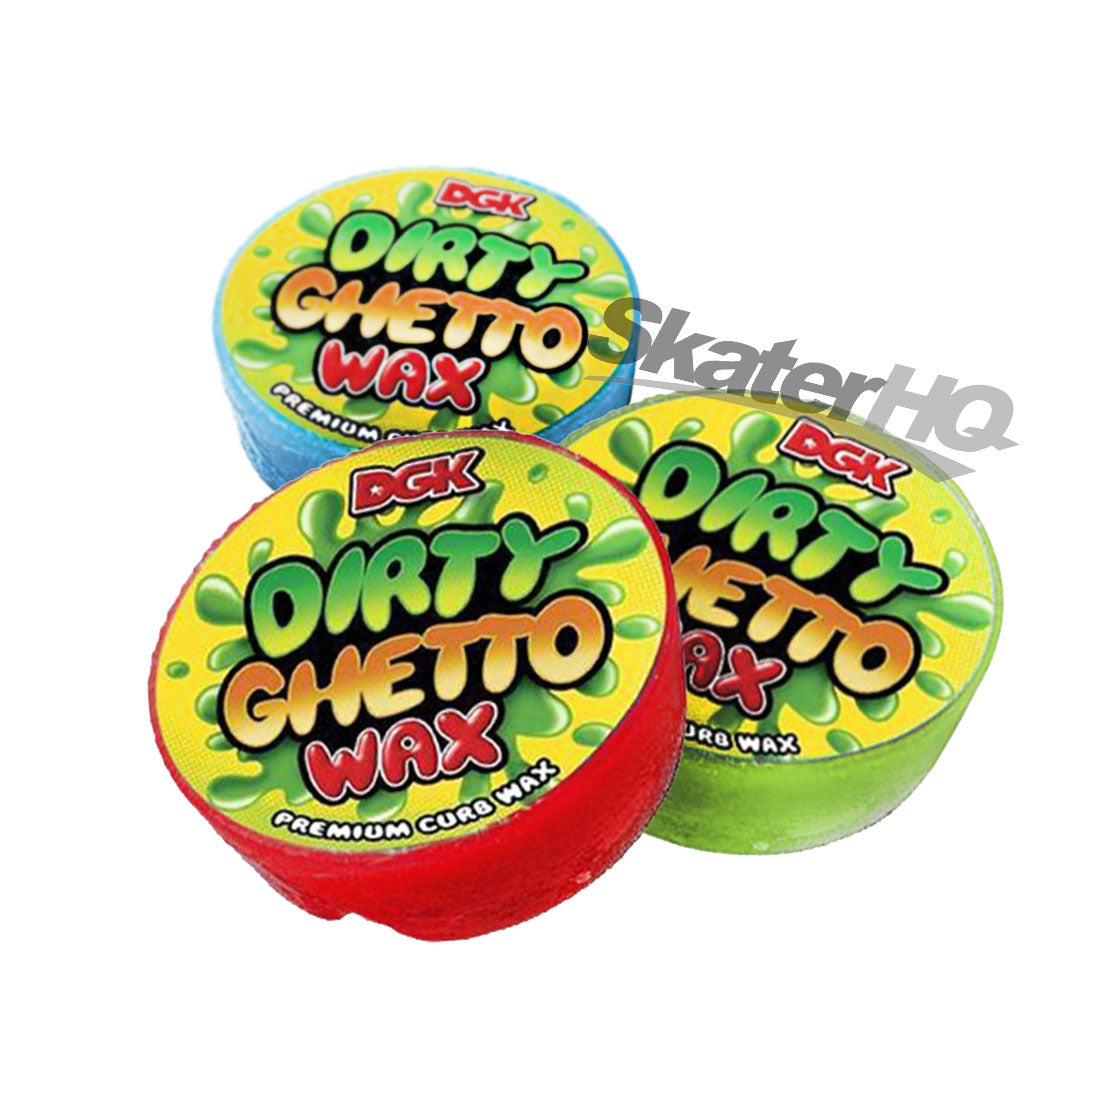 DGK Dirty Ghetto Wax - Assorted Colours Skateboard Accessories